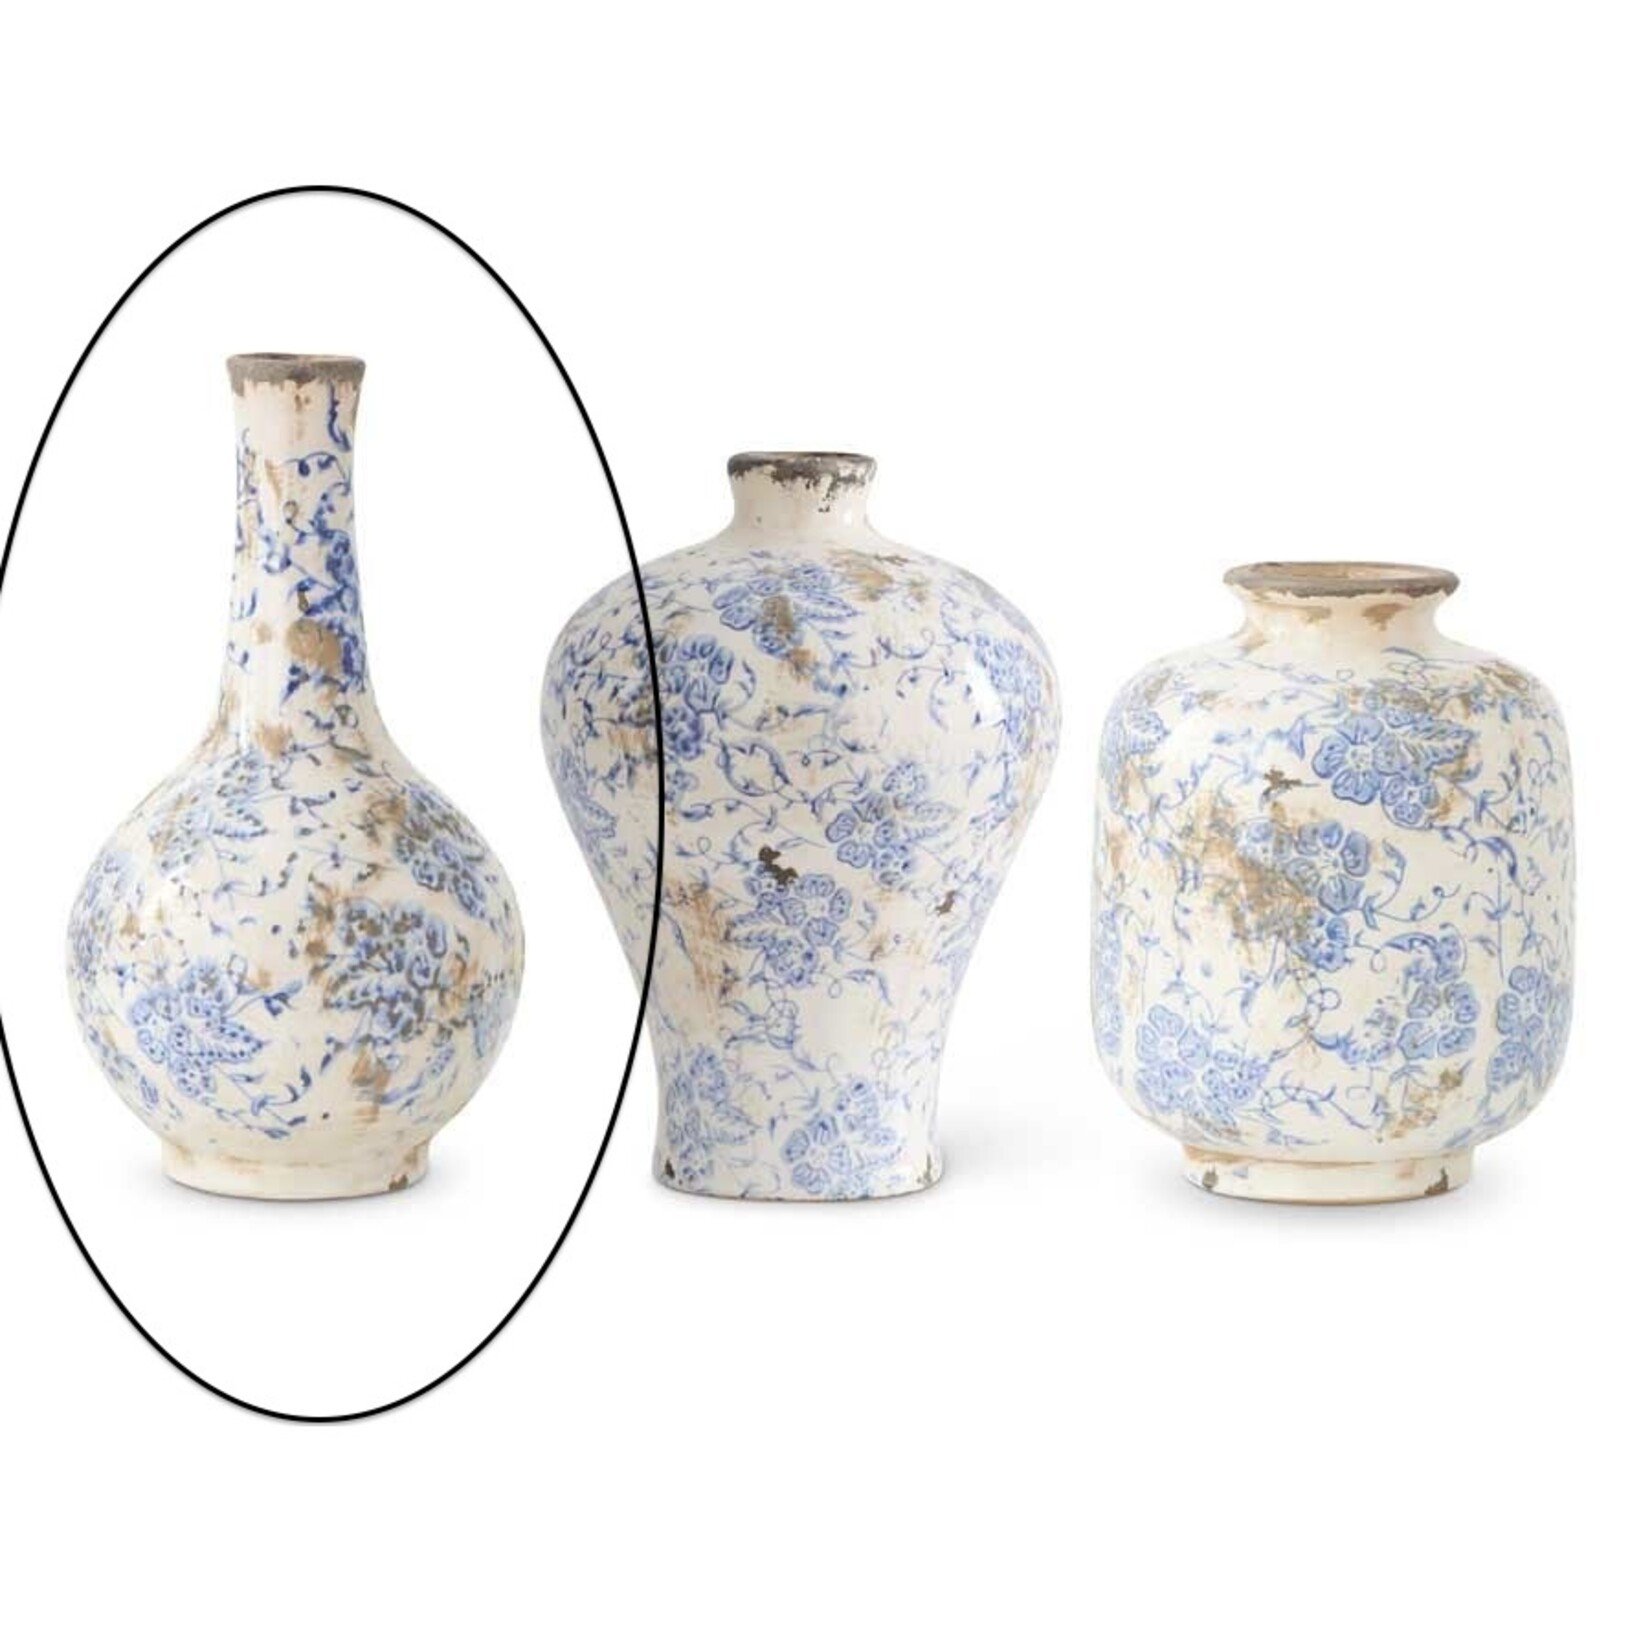 K & K Interiors 8.25 inch Blue and White Ceramic Vase